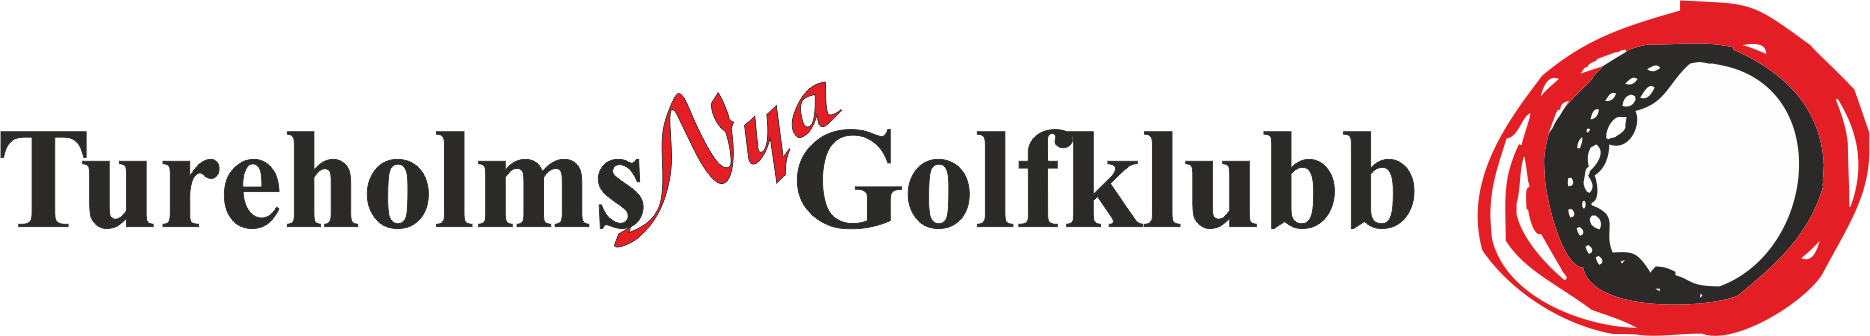 Tureholms Nya Golfklubb Logo